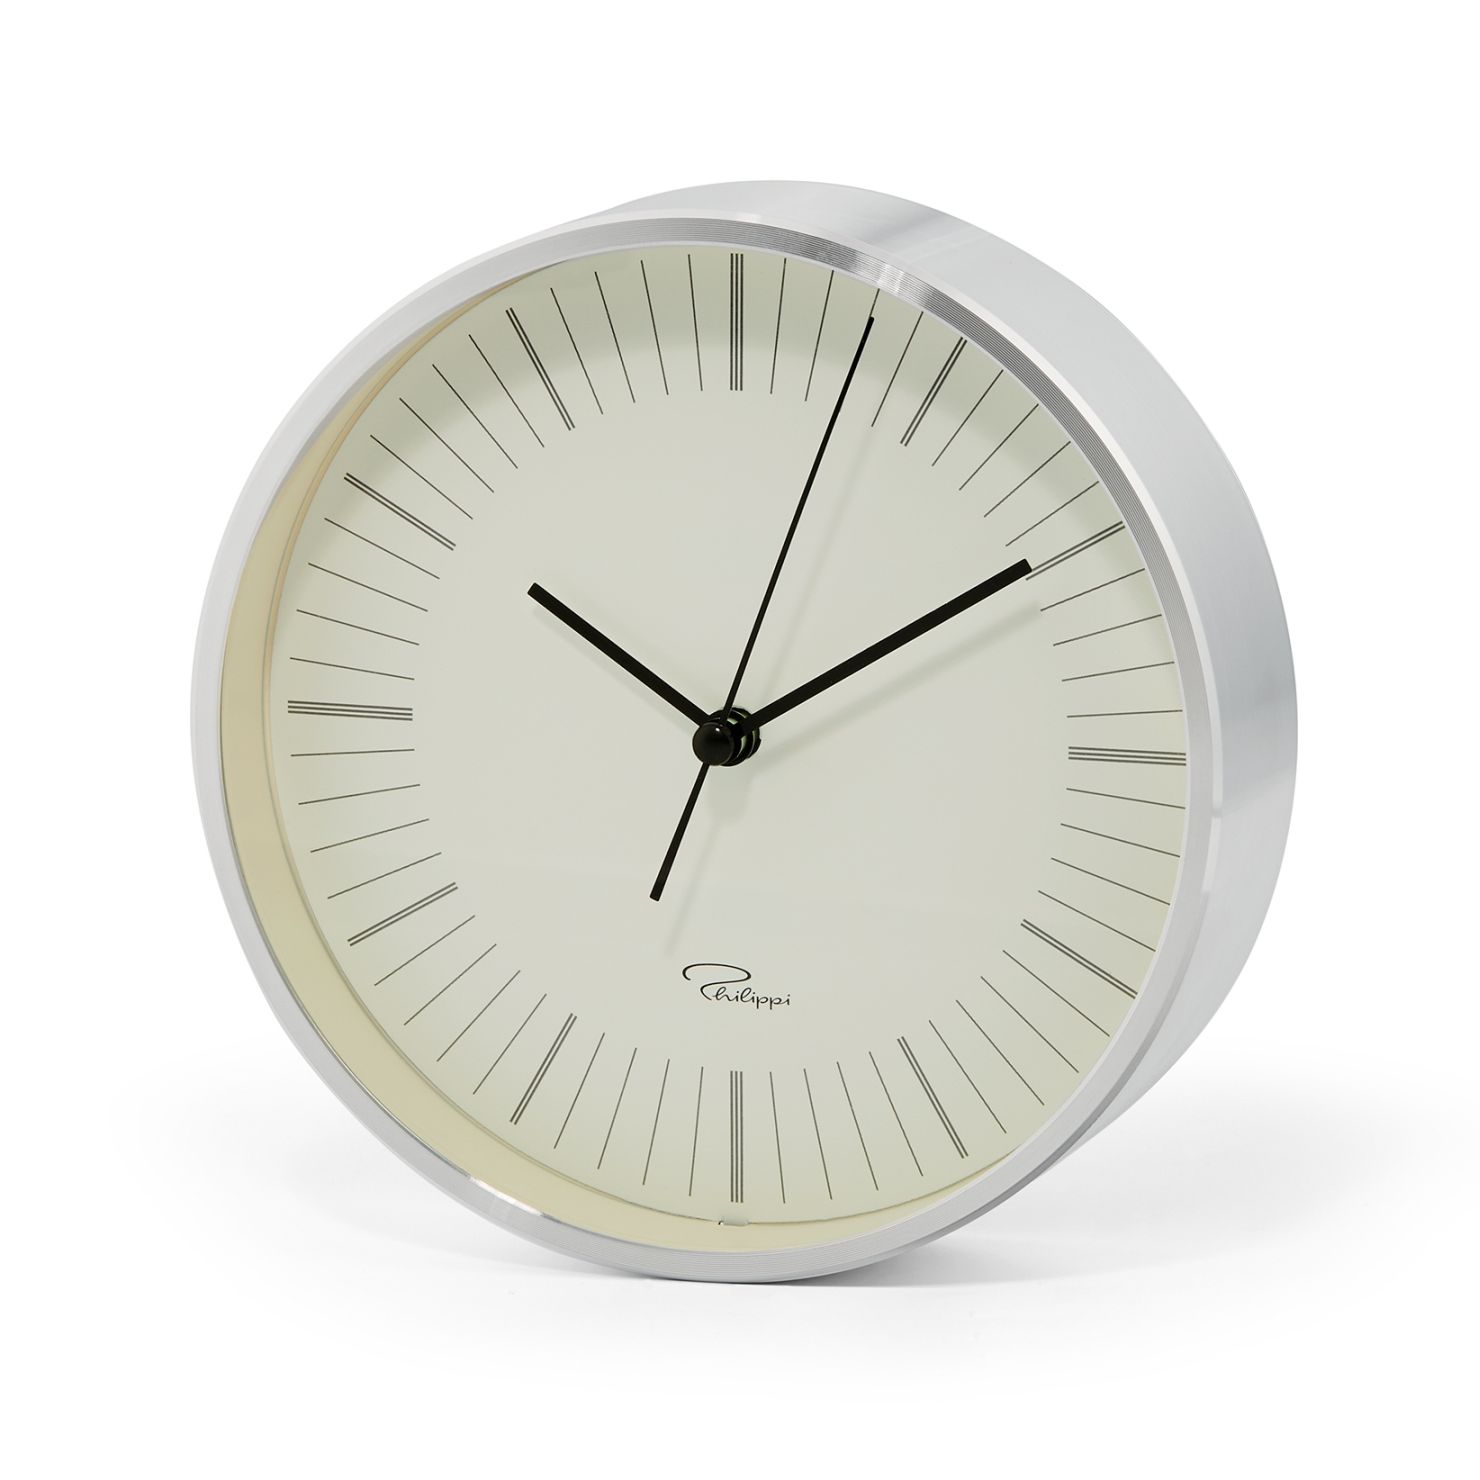 TEMPUS W4 nástěnné hodiny 20 cm, bílé - PHILIPPI